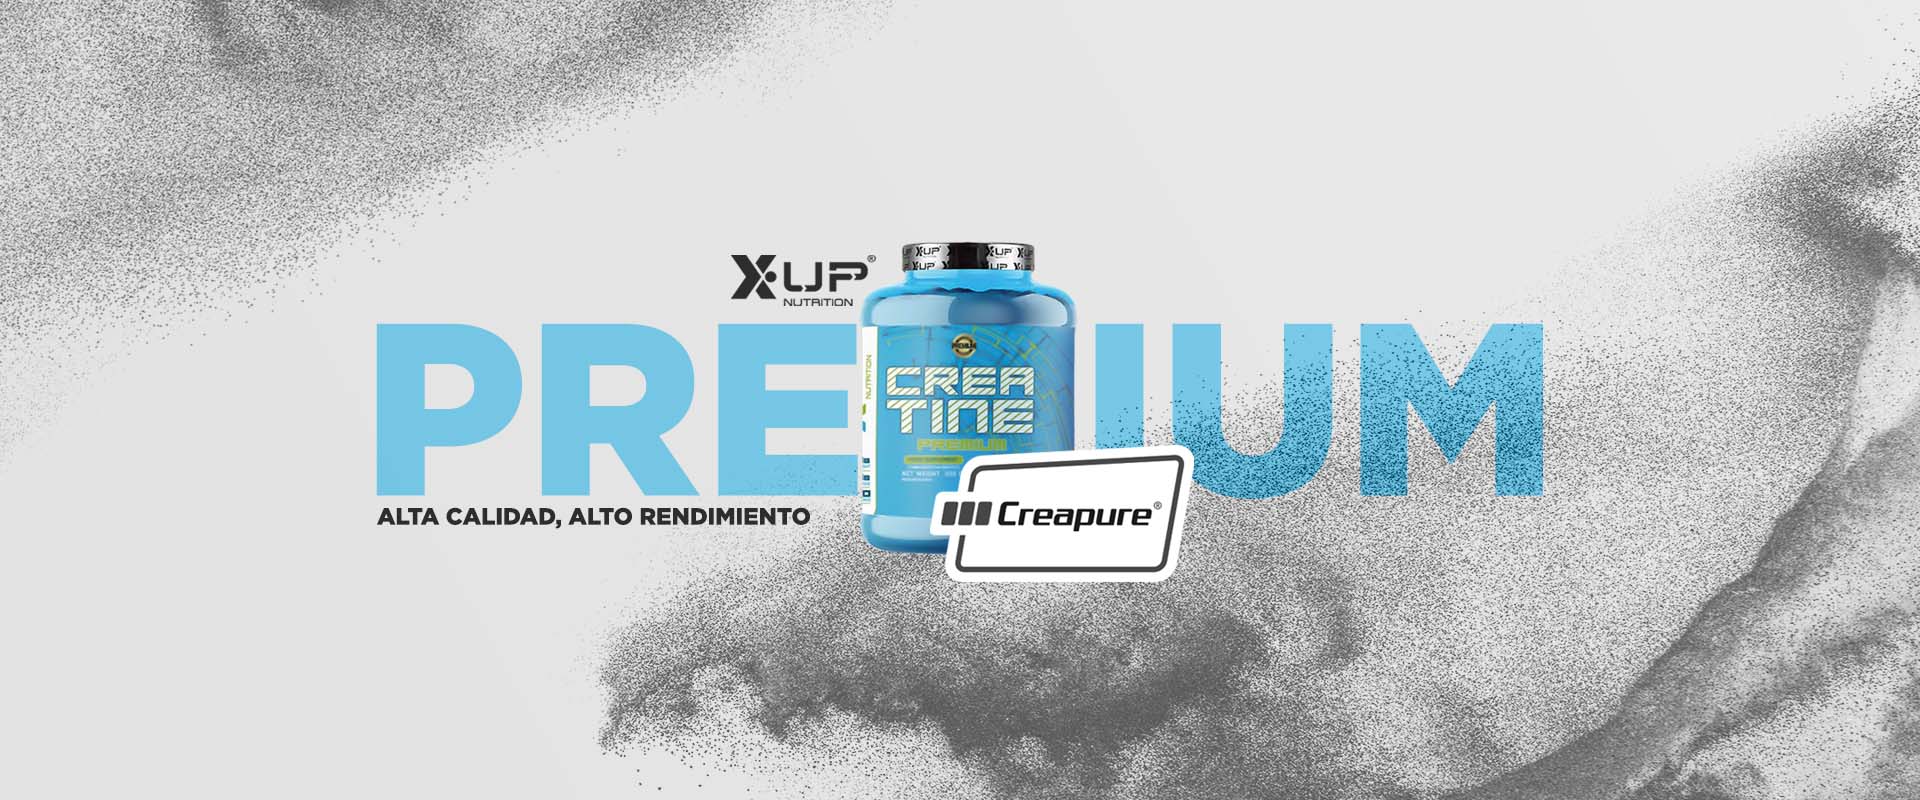 Creatine Premium Creapure X-UP